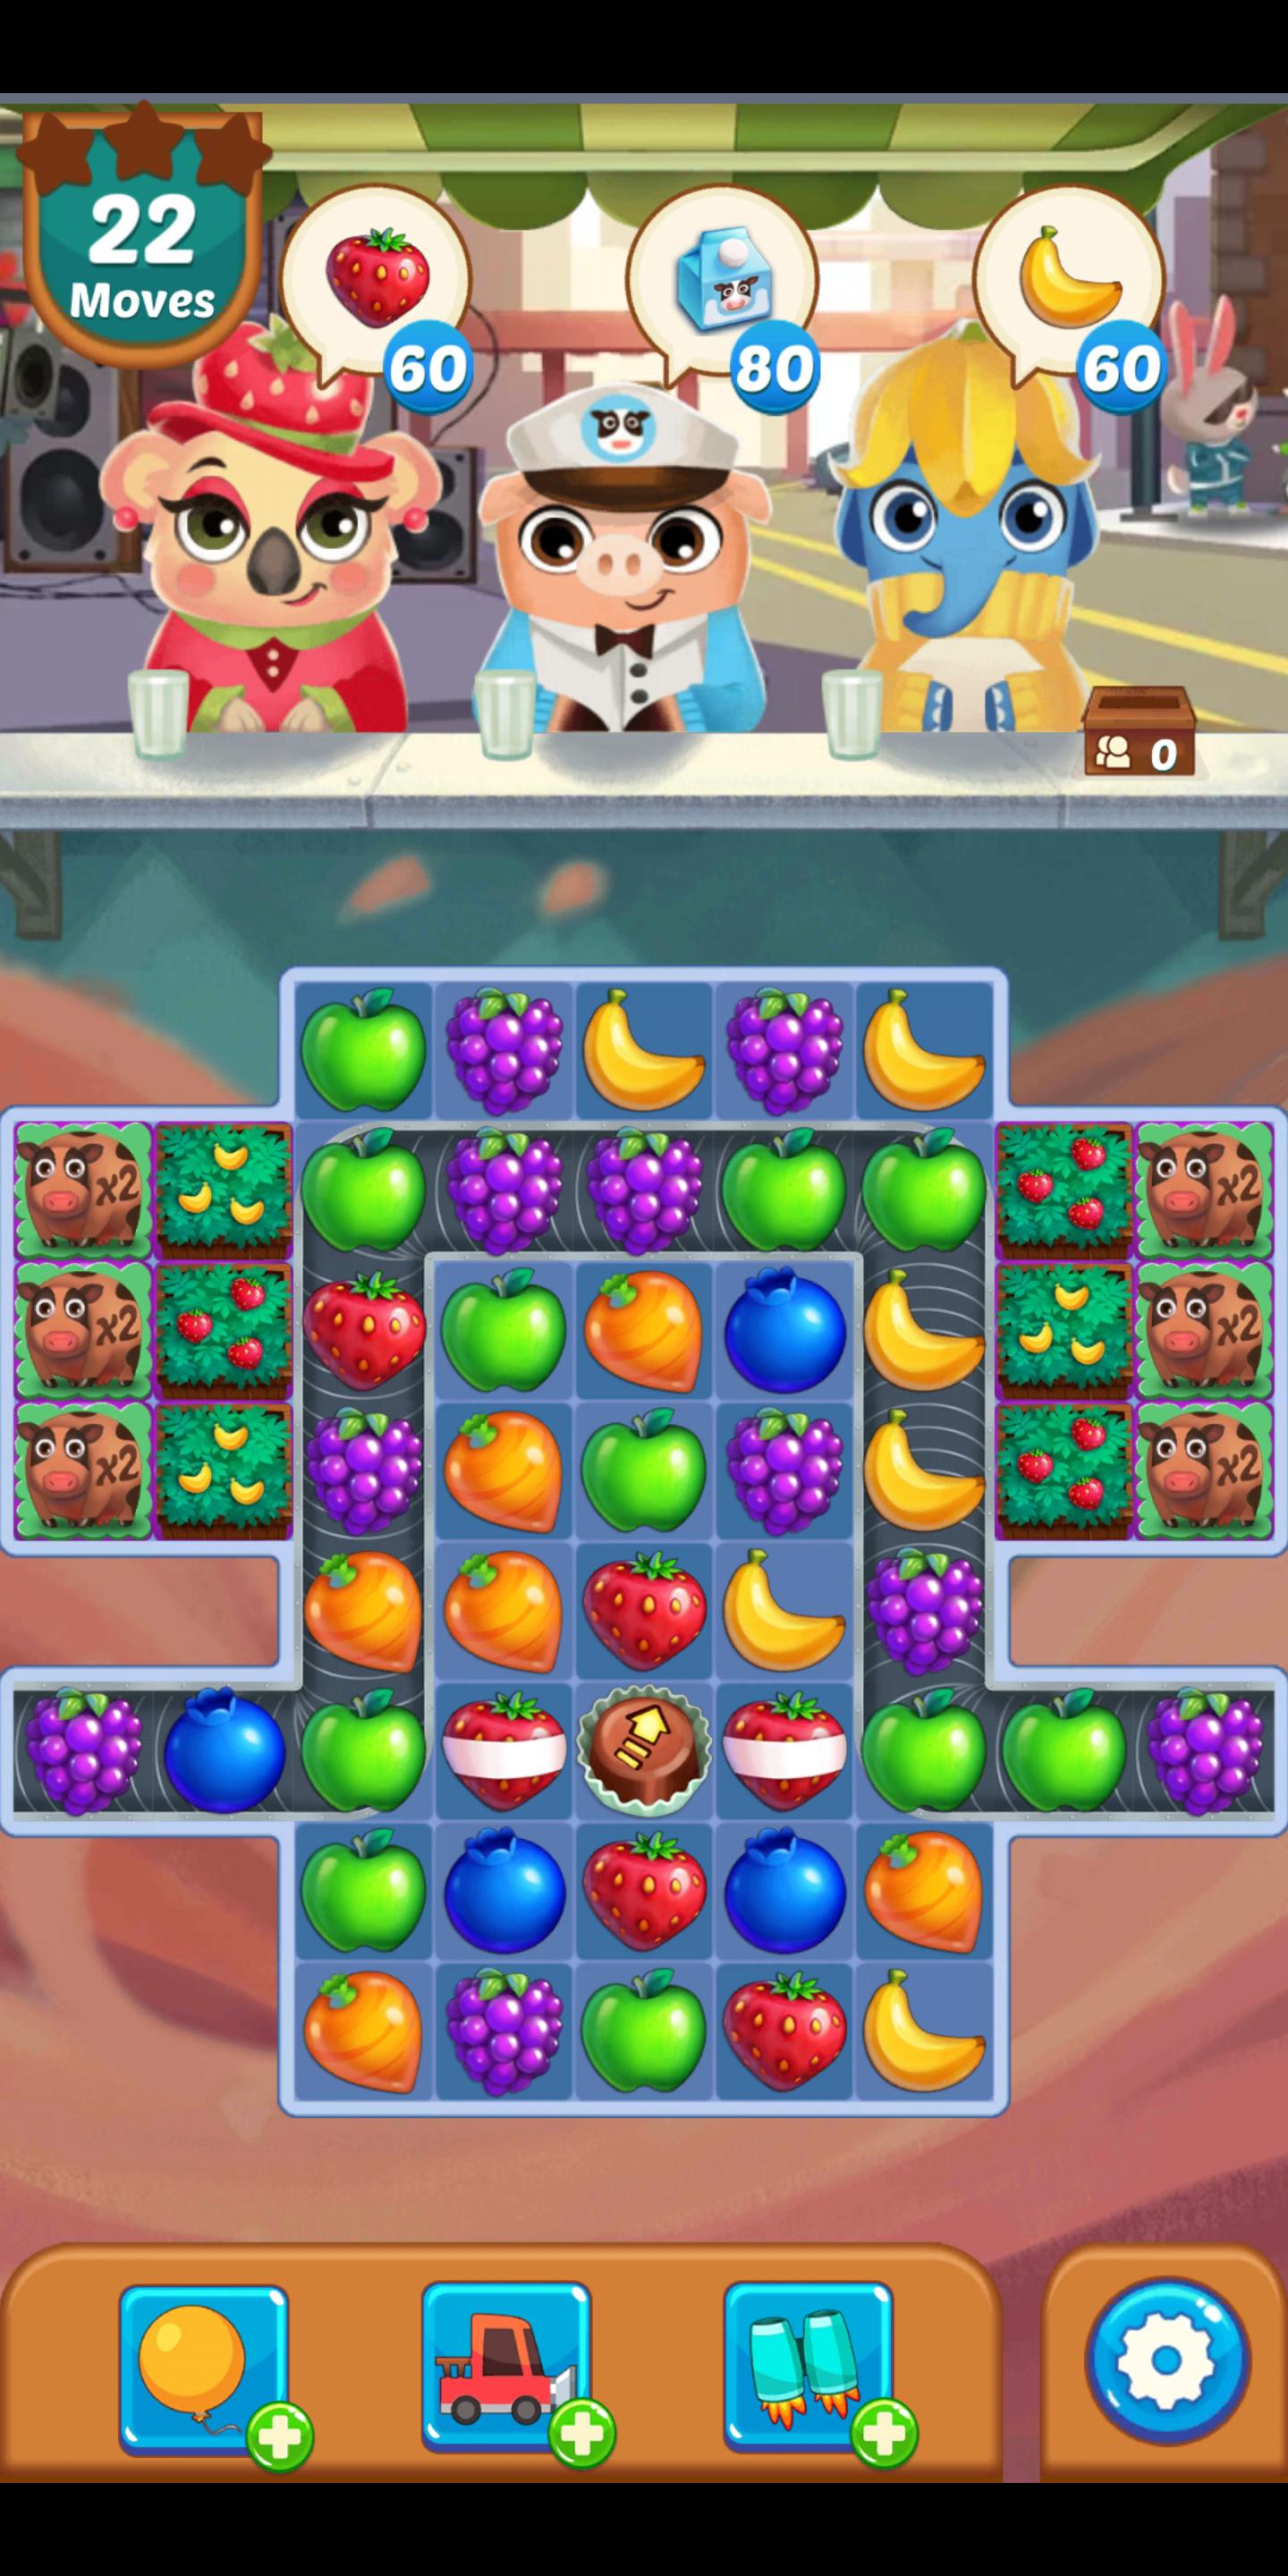 Juice Jam Puzzle Game & Free Match 3 Games 3.0.5 Screenshot 24